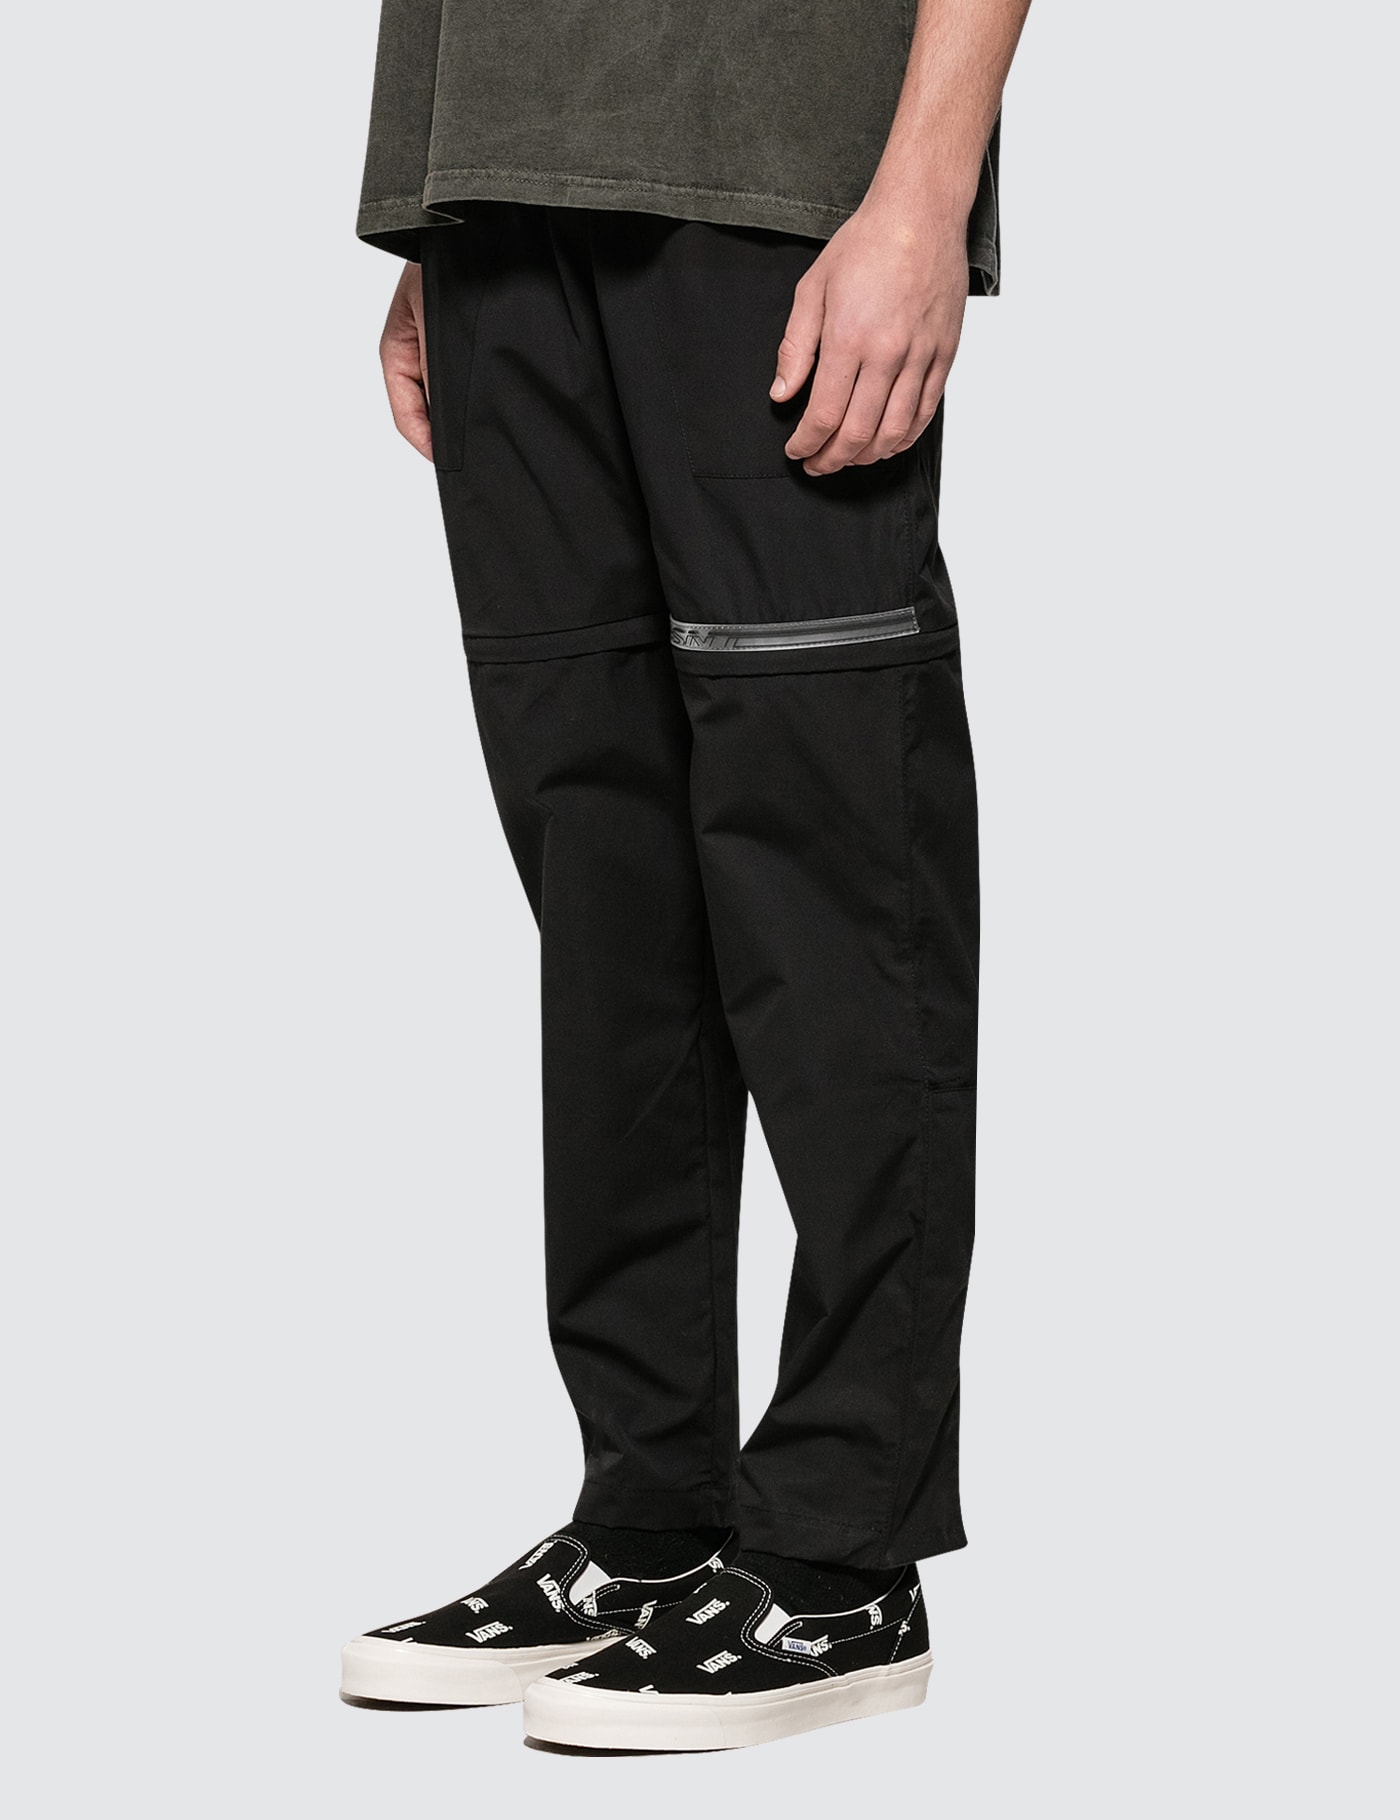 Represent - Milton Technical Zip Pants | HBX